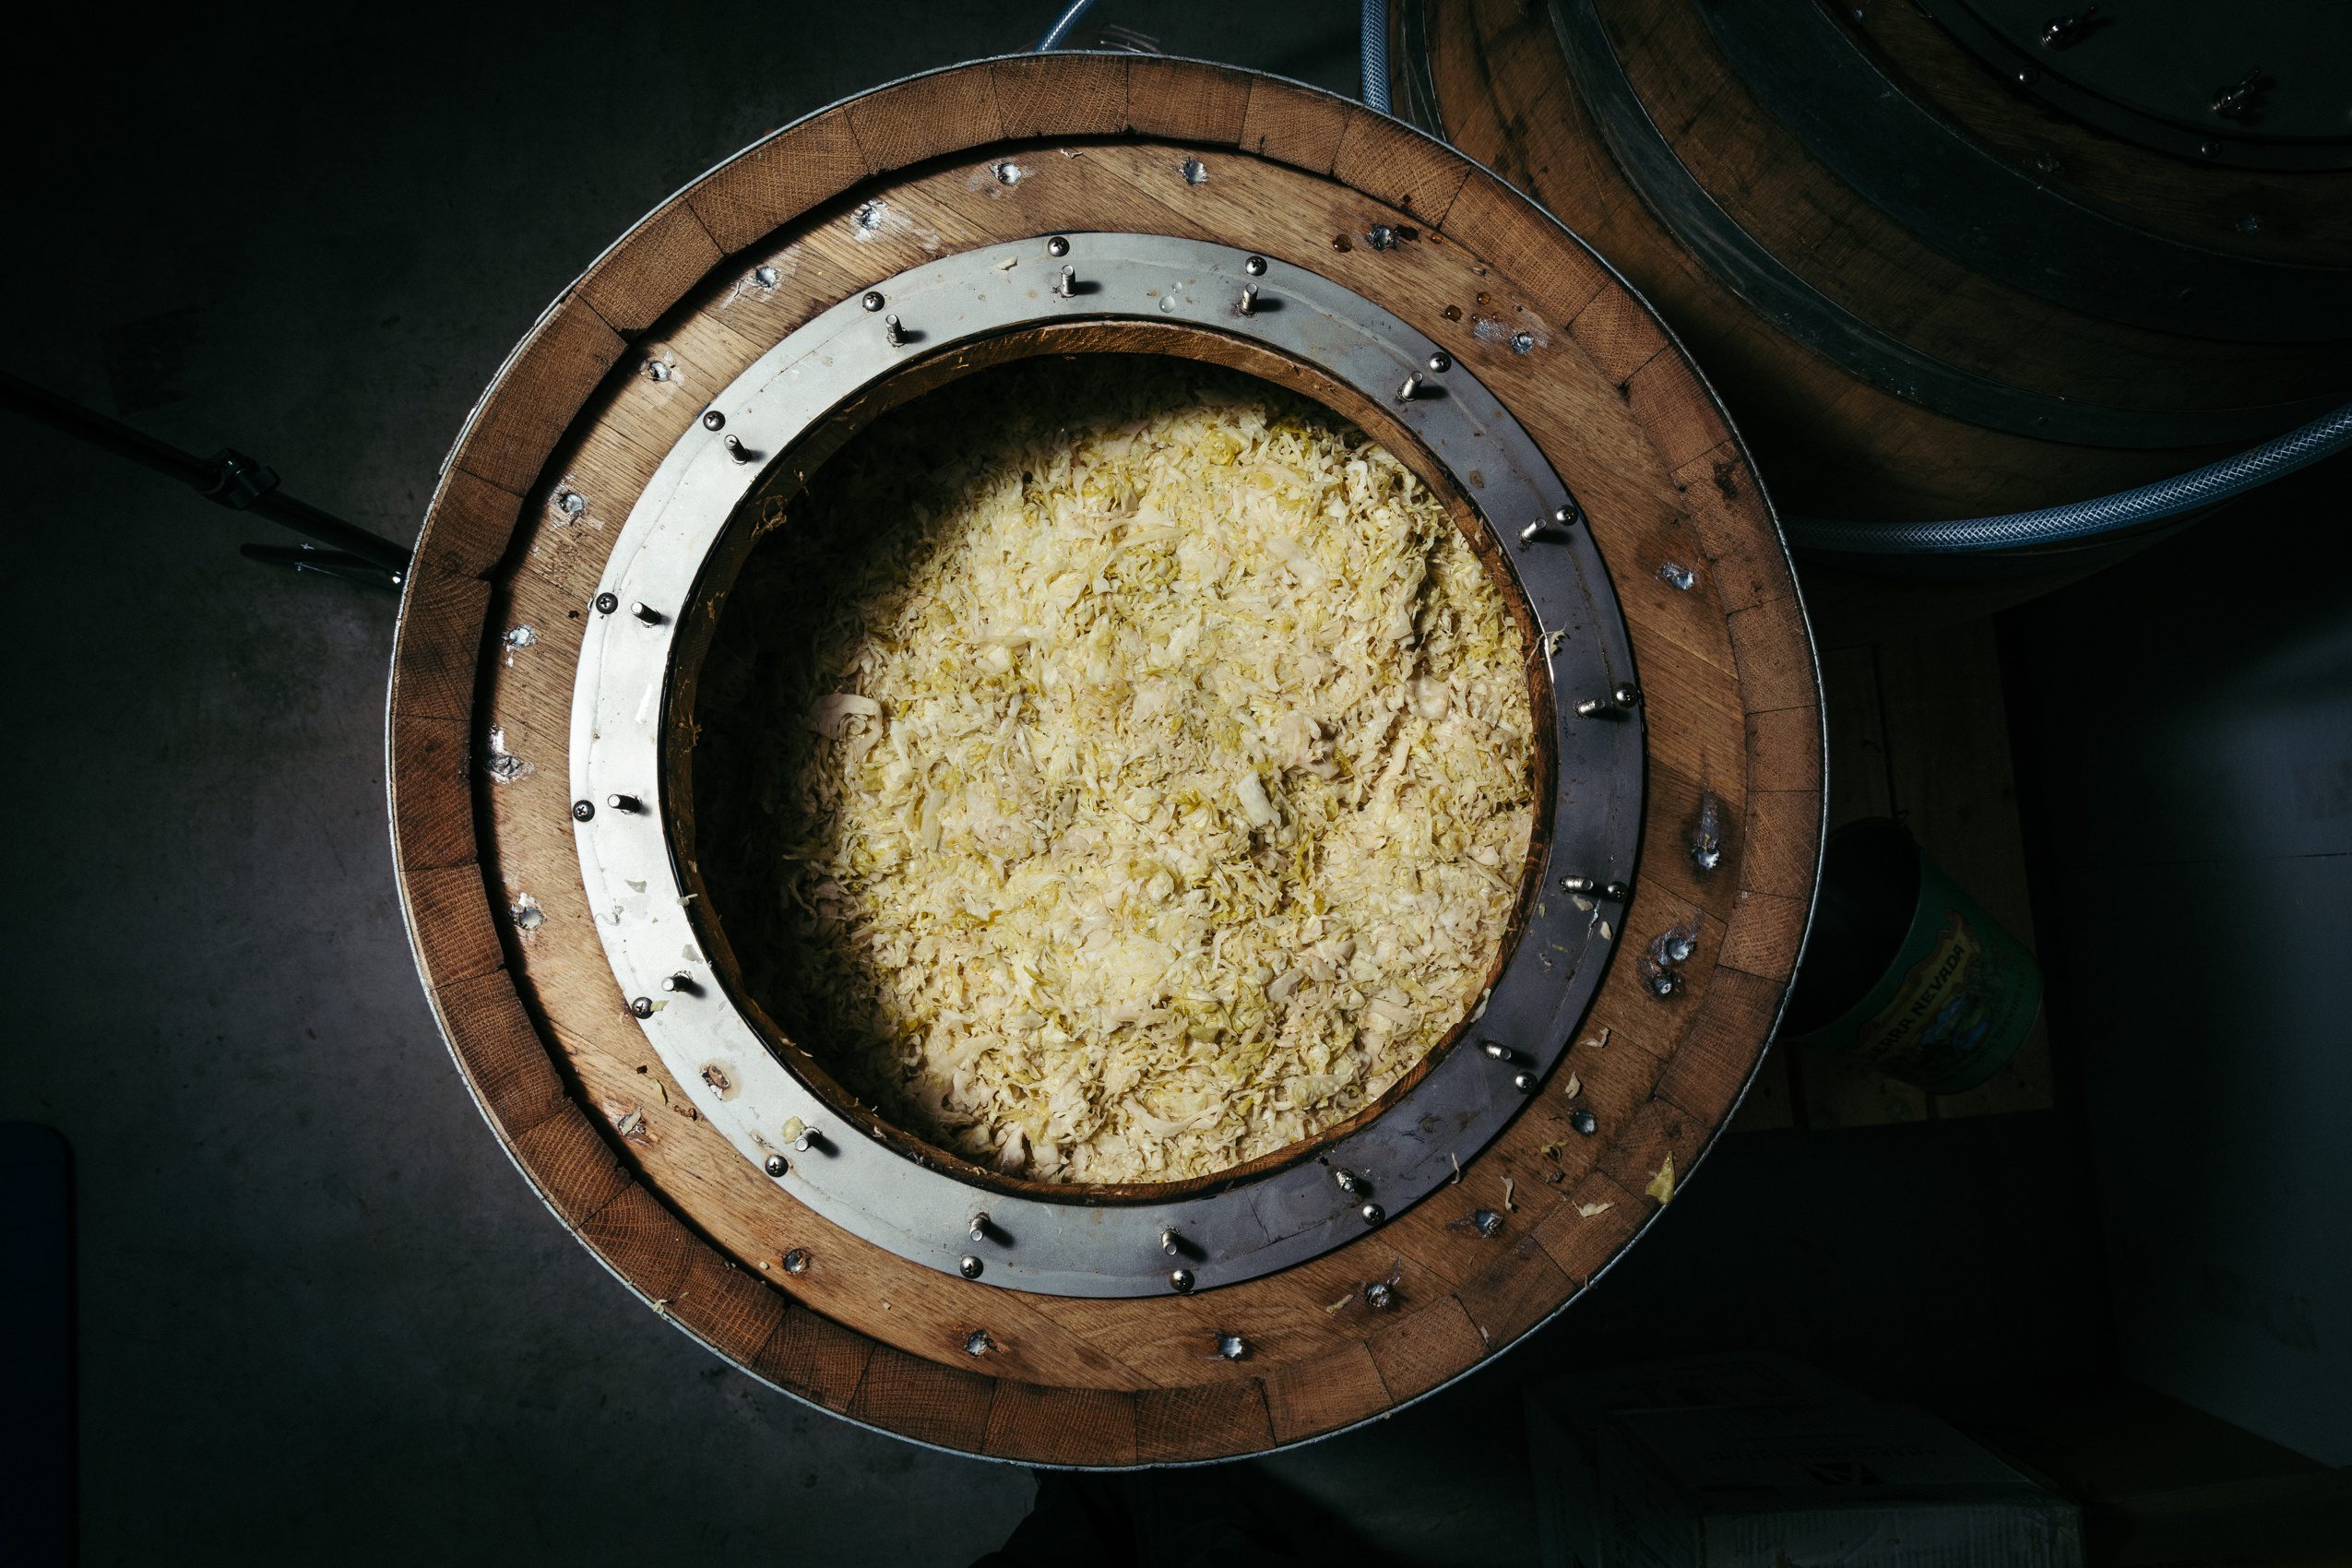 Overhead view of sauerkraut inside a beer barrel